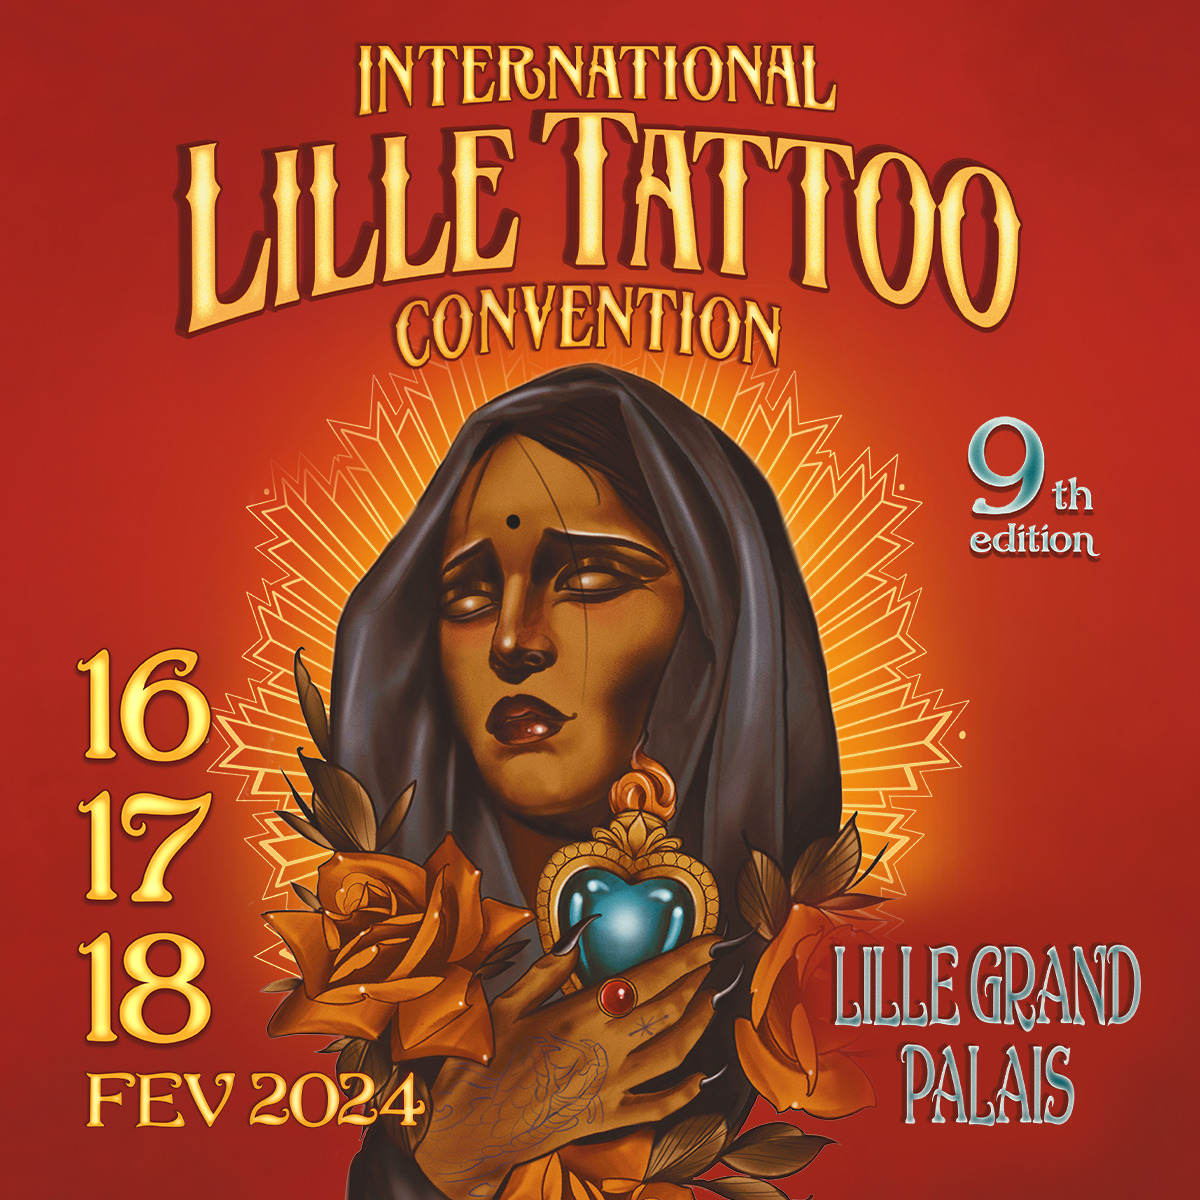 International Lille Tatoo Convention 